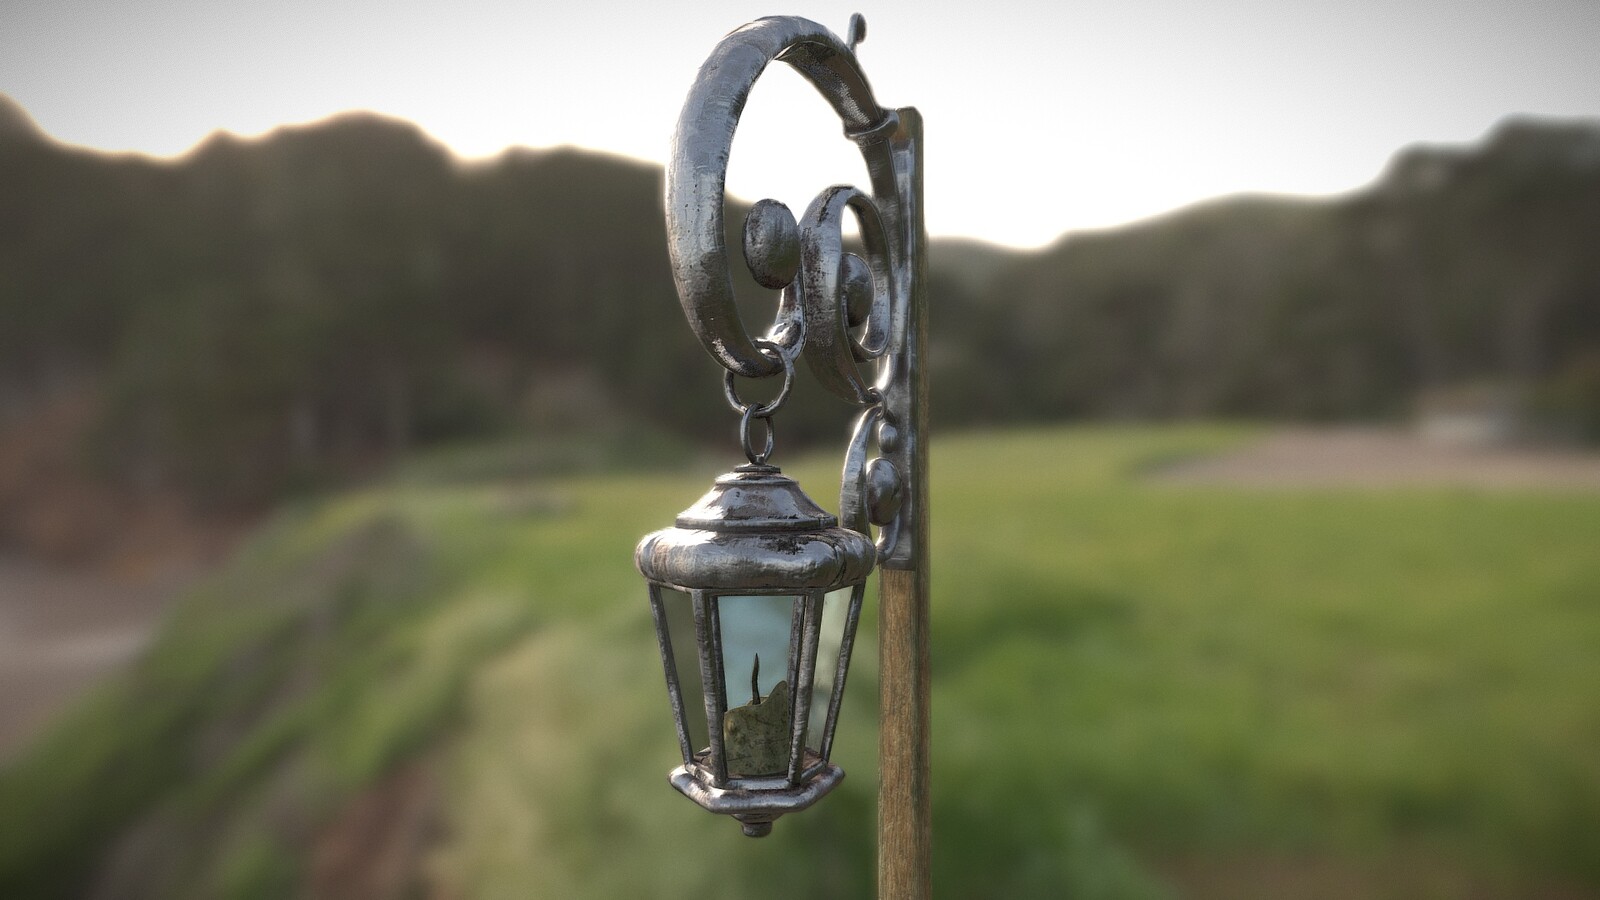 Stylized medieval street lantern